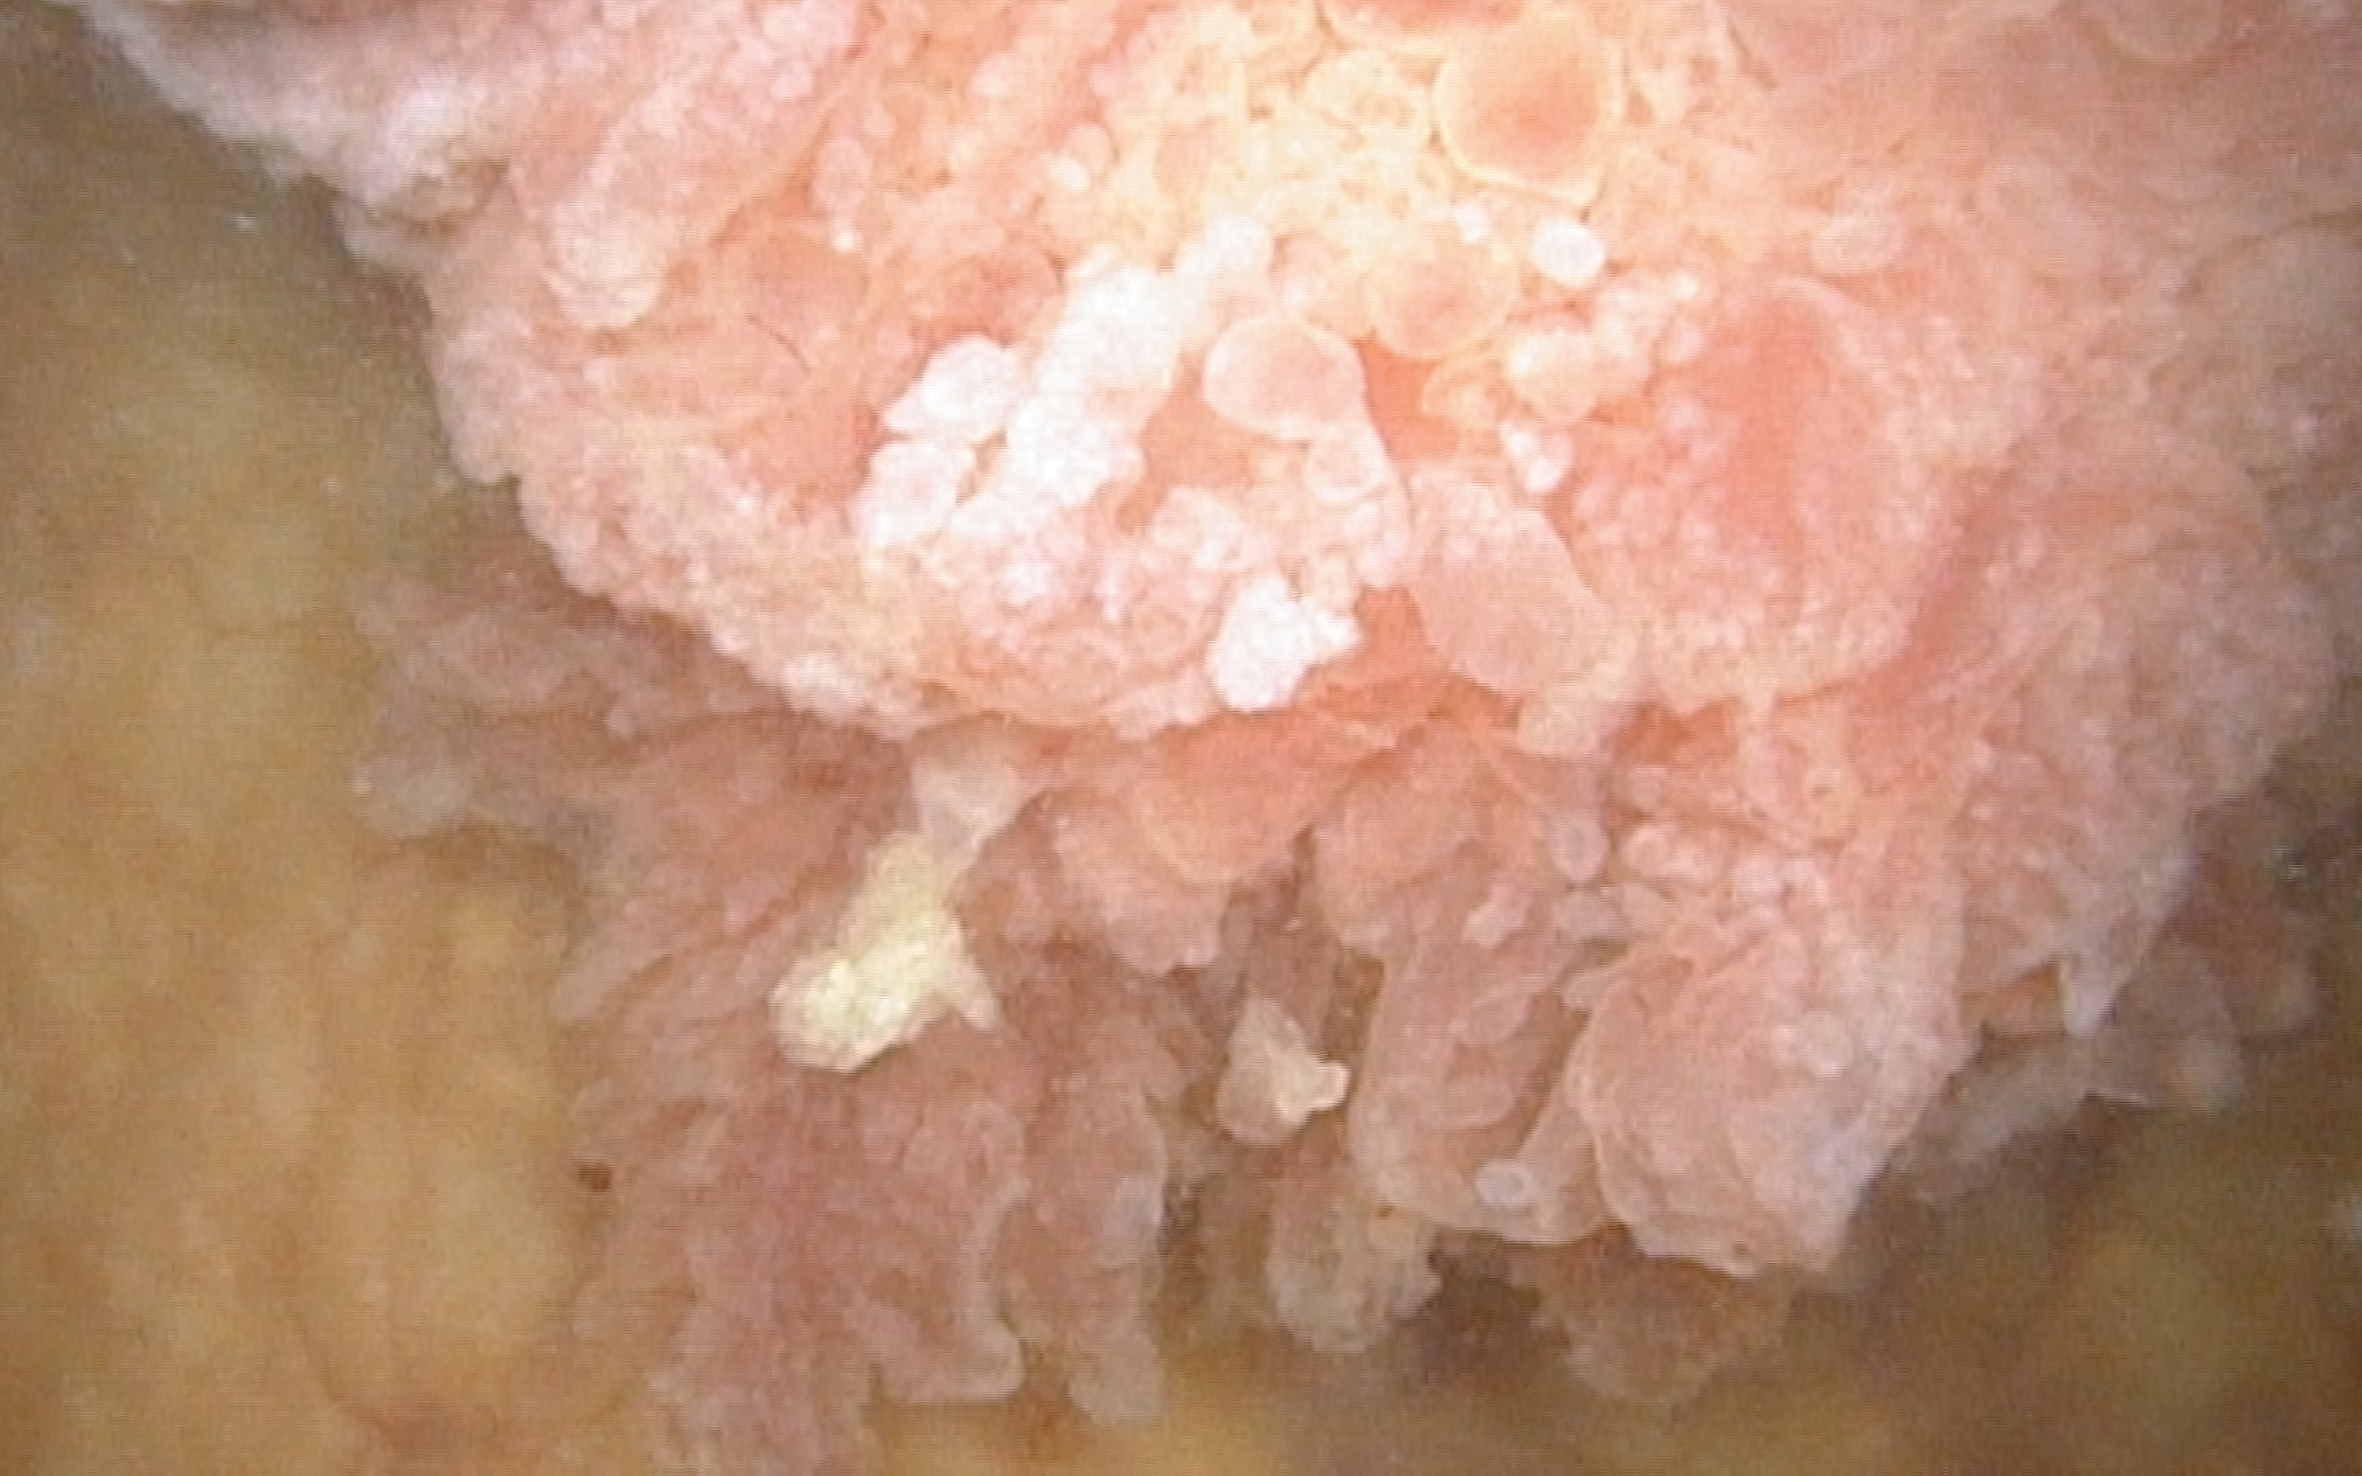 Large papillary tumor.